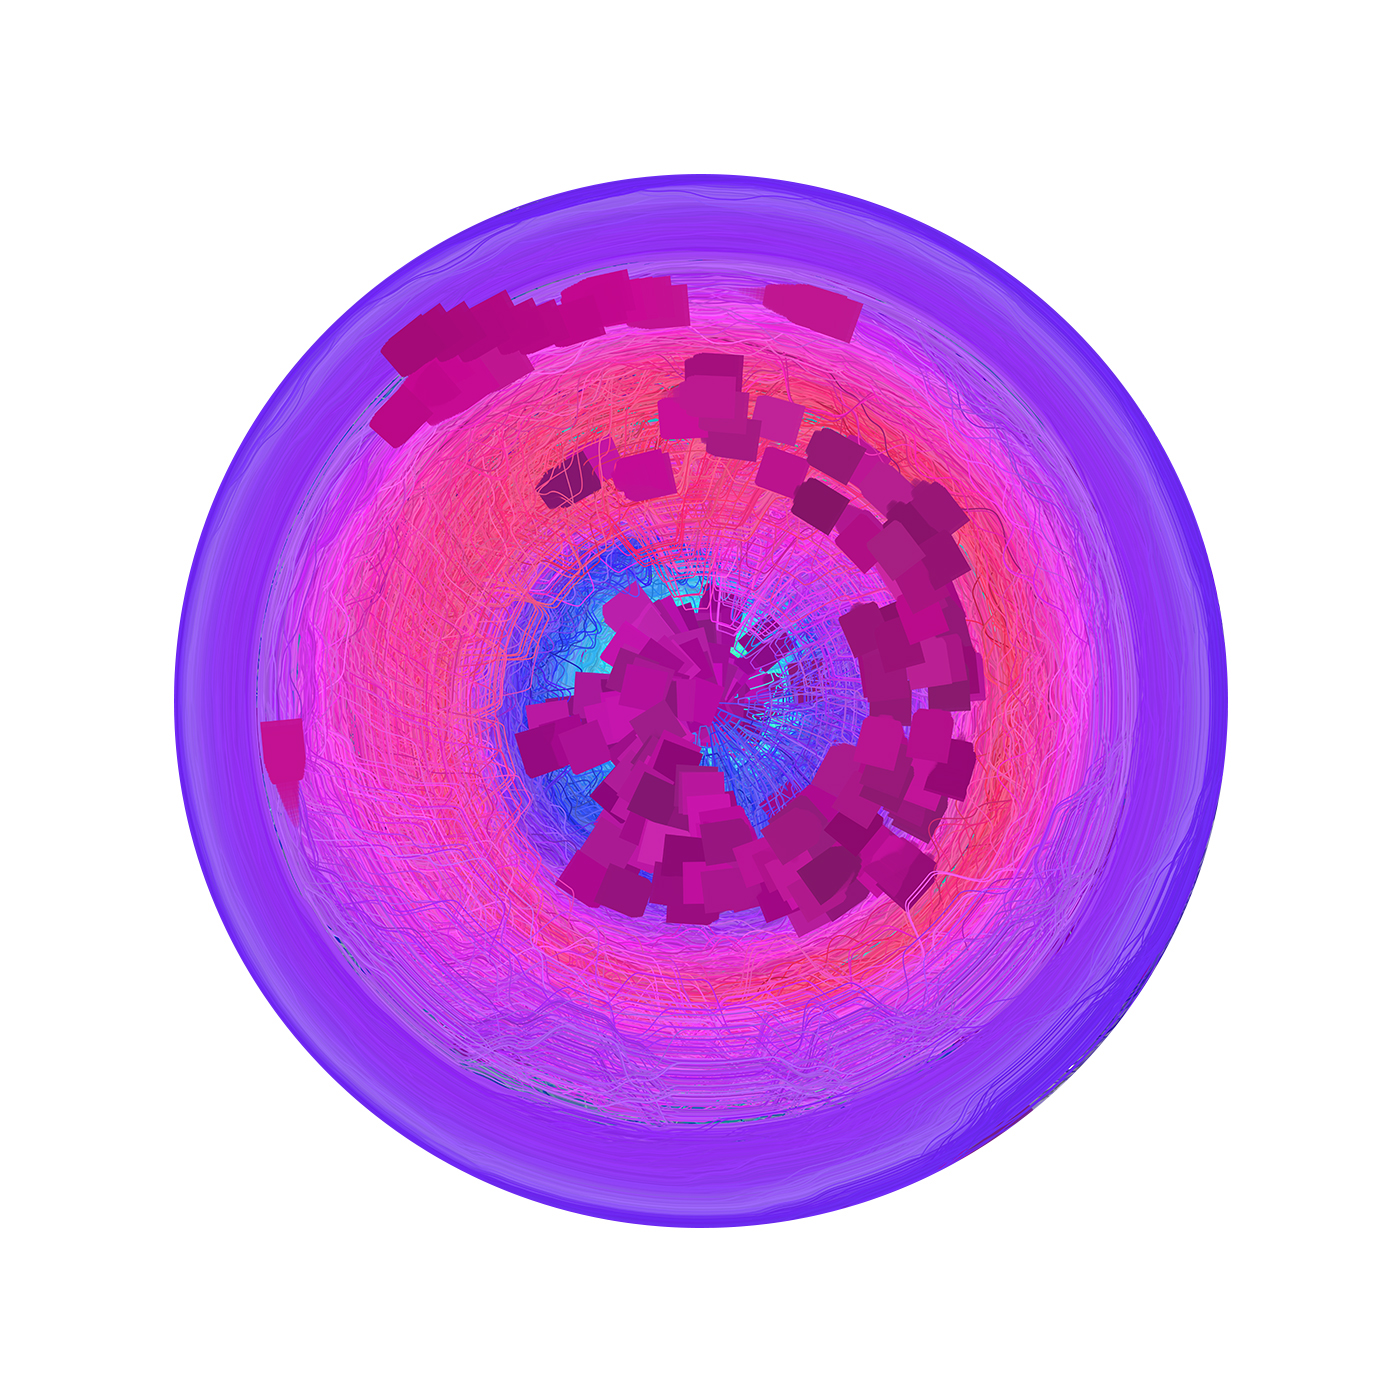 Mandala processing generative art generative circle geometry java sound visualizer wave FFT